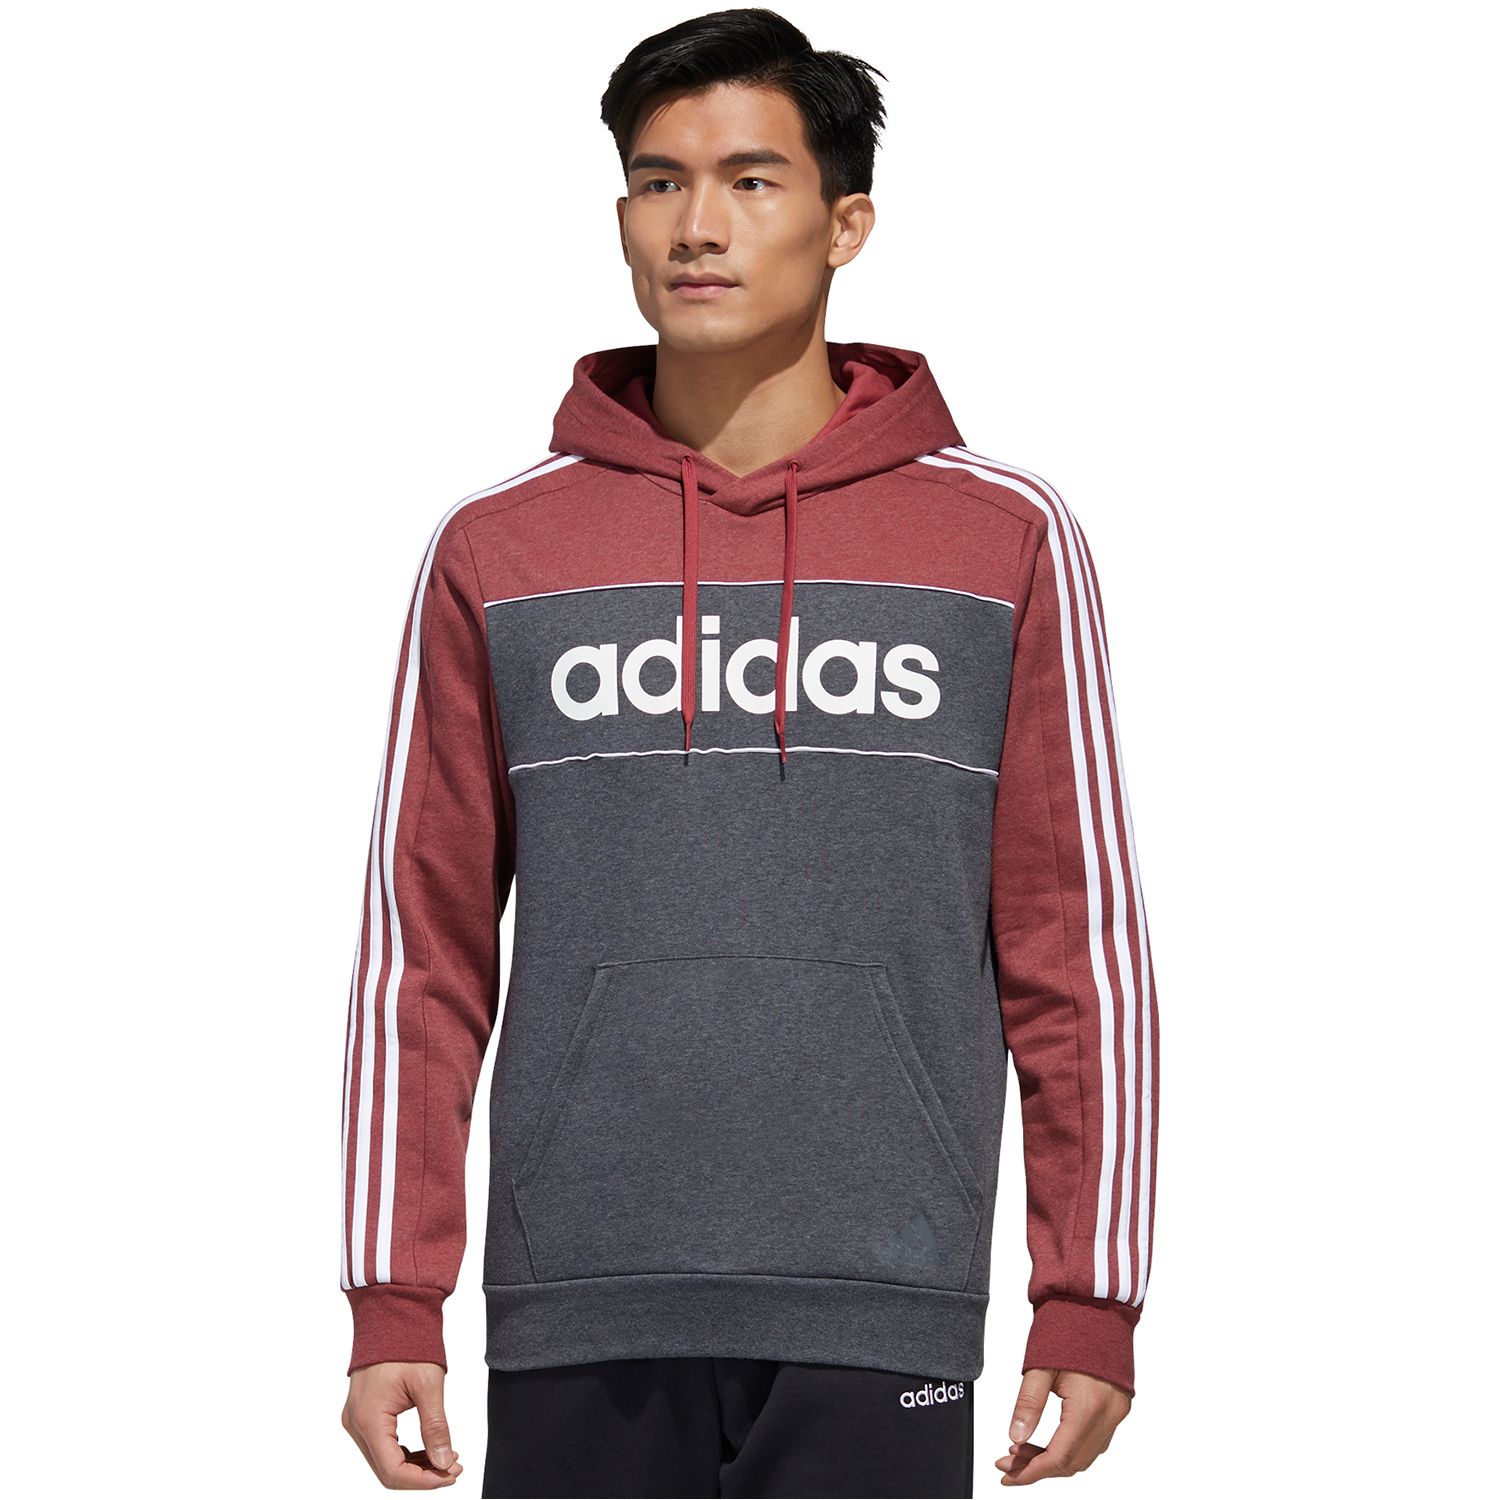 adidas 3xlt hoodie